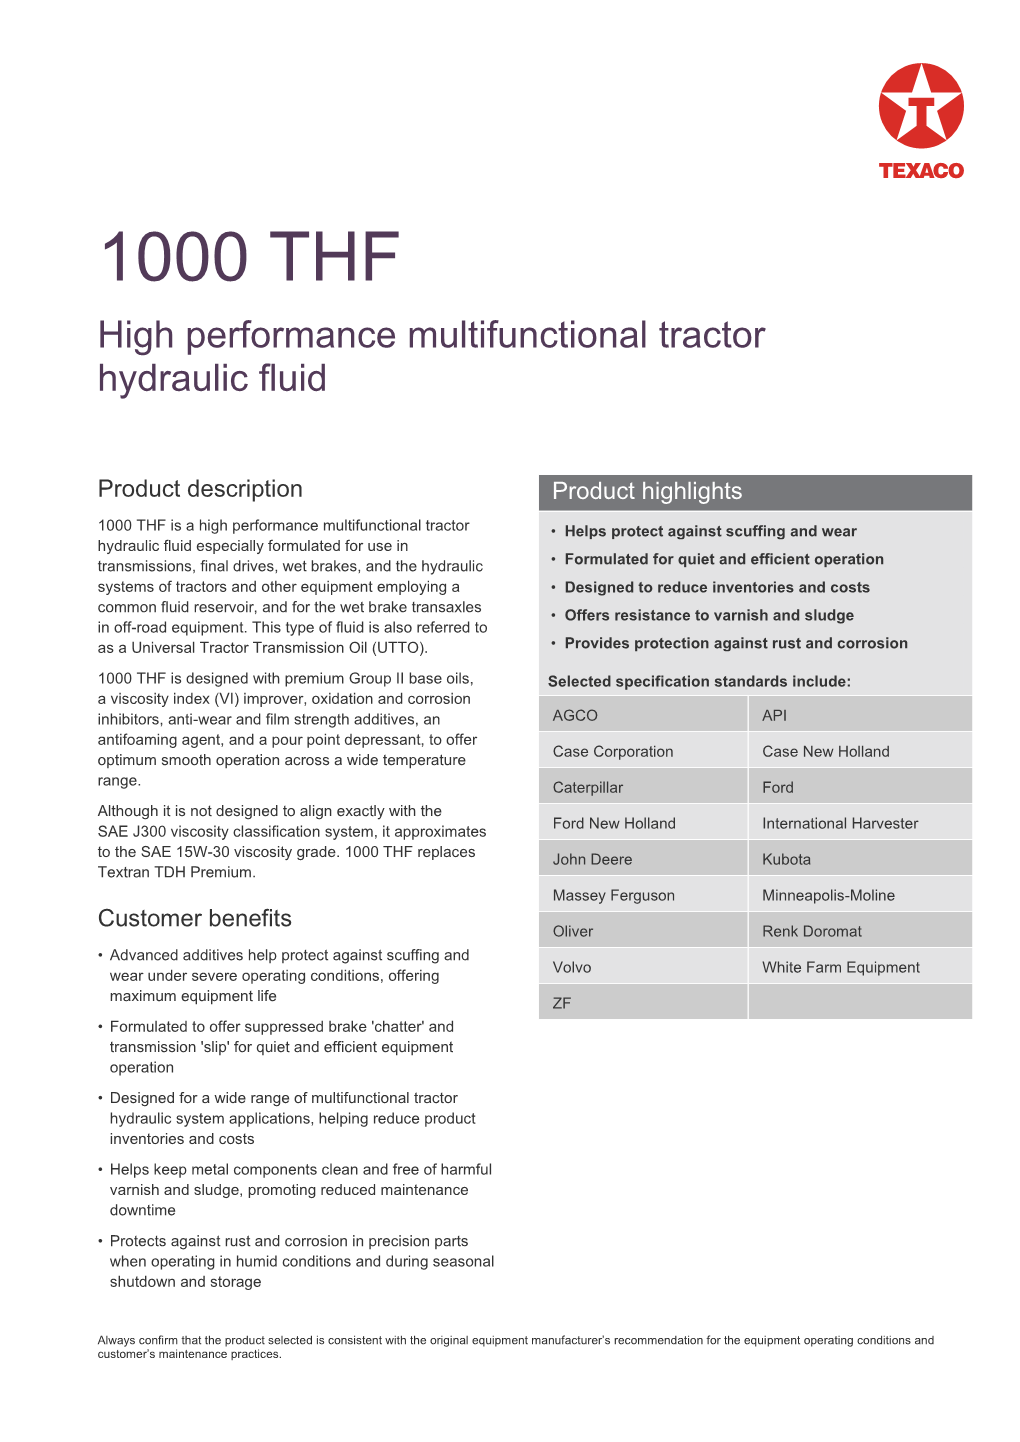 1000 THF High Performance Multifunctional Tractor Hydraulic Fluid